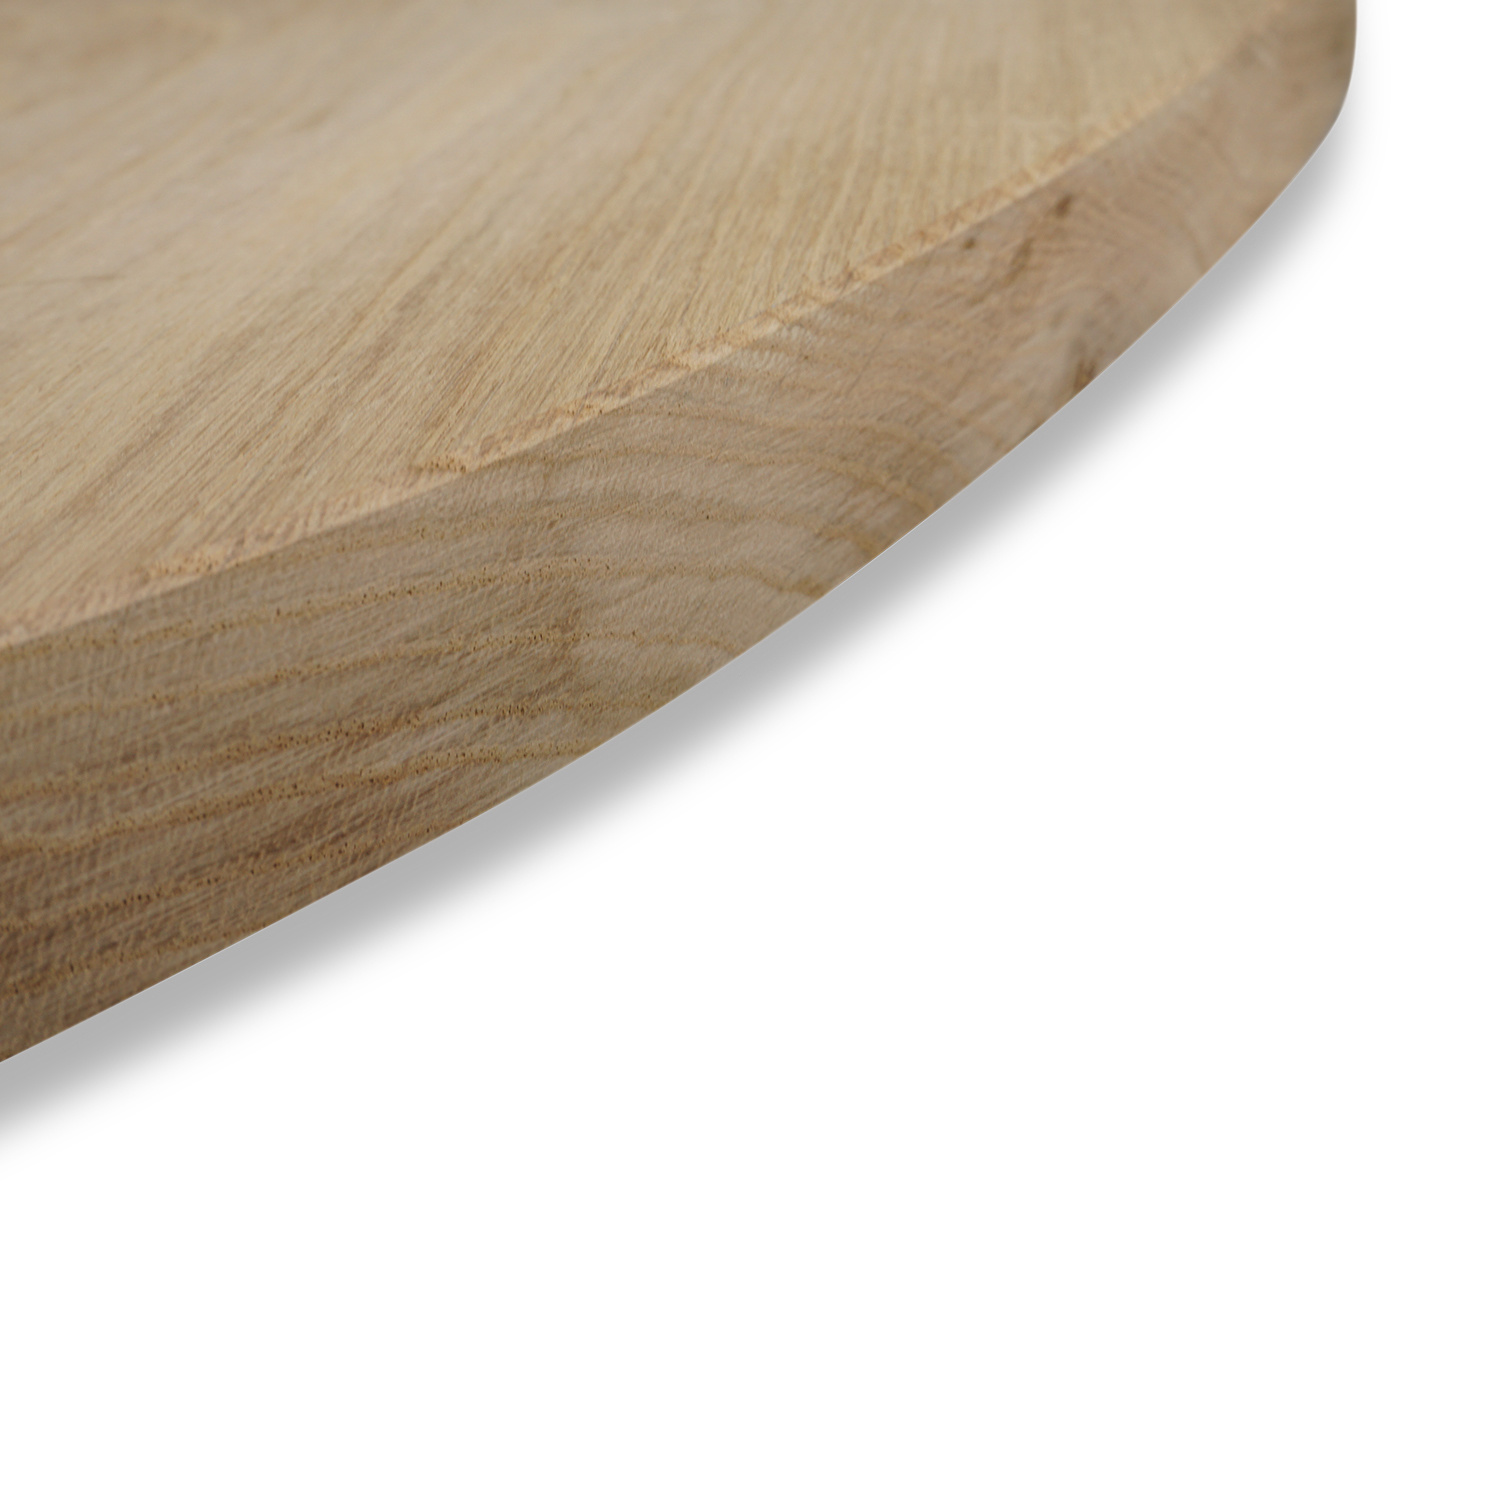  Ovaal eiken tafelblad - 4 cm dik (1-laag) - foutvrij Europees eikenhout - tafelblad ellips / ovaal - kd 8-12%